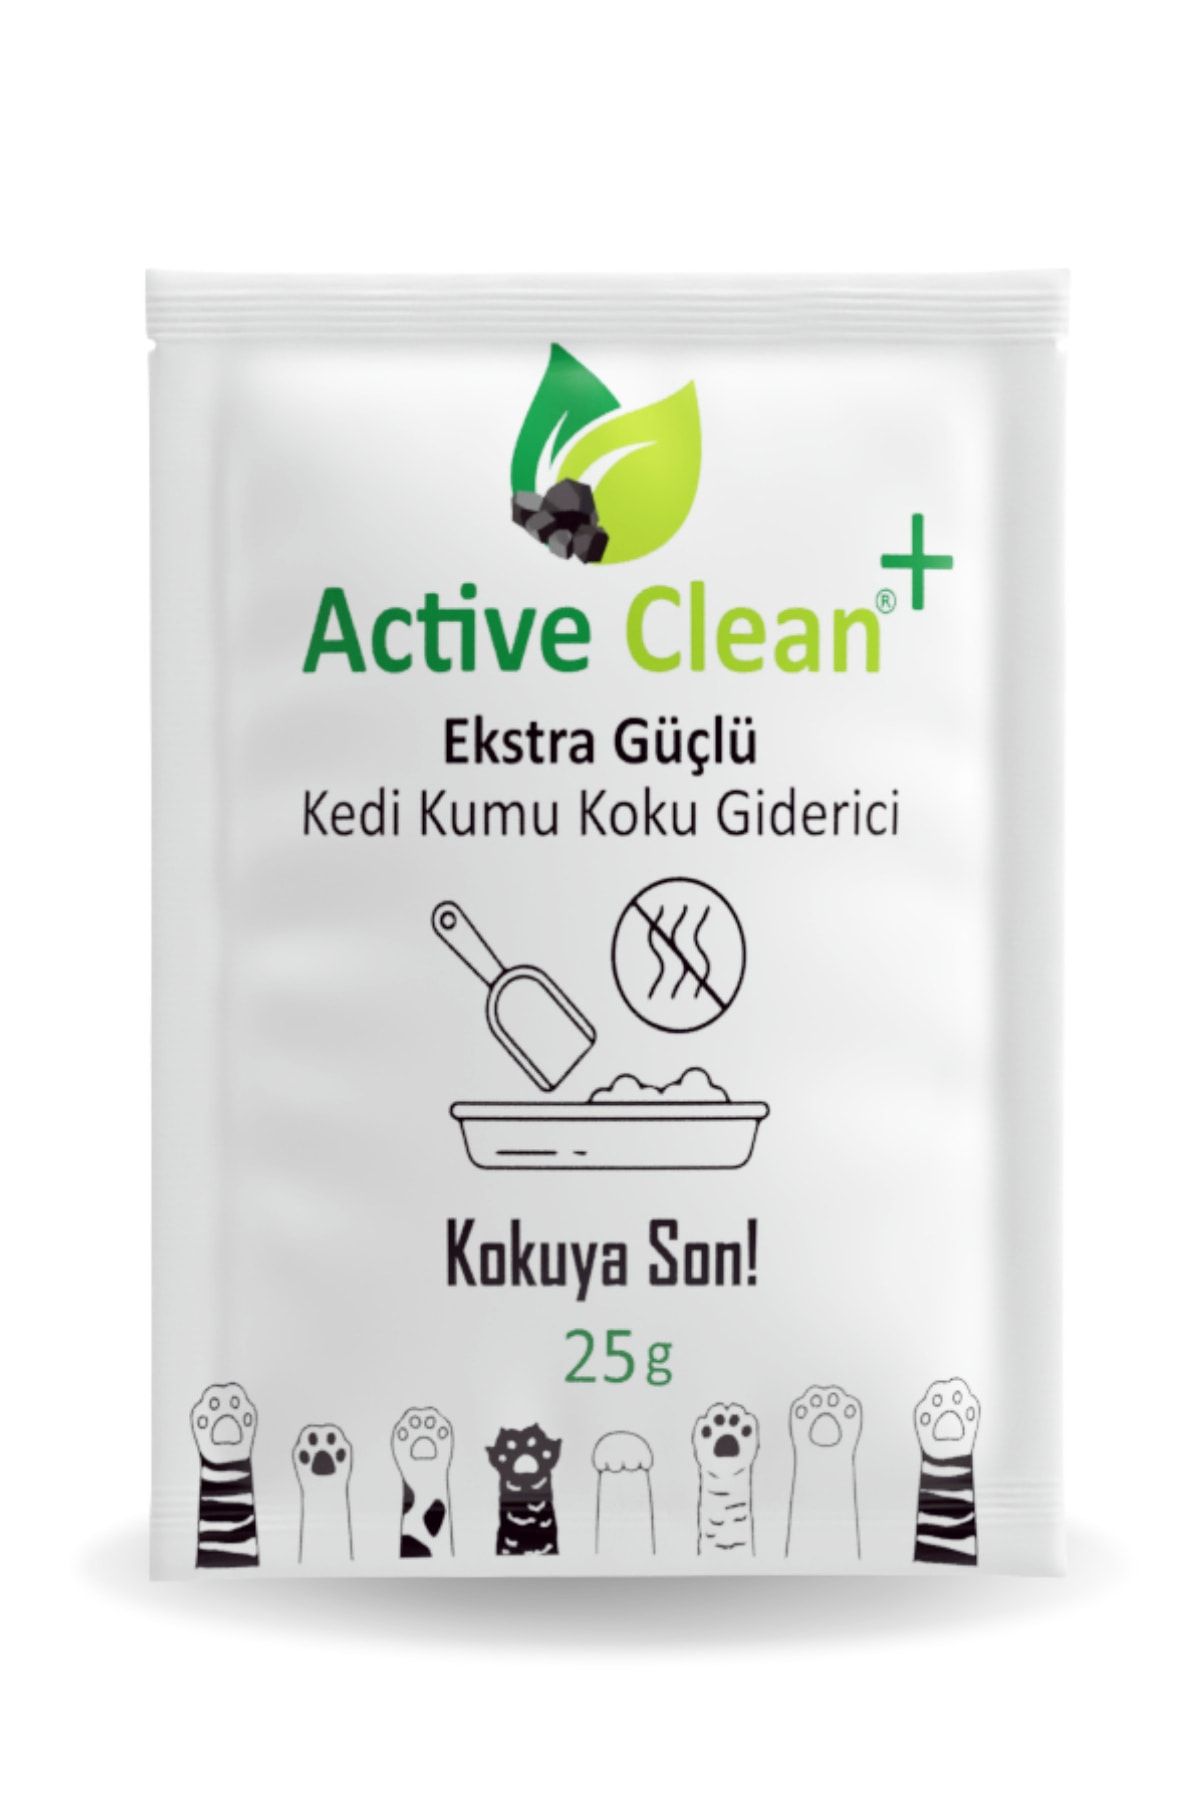 Active Clean Kedi Kumu Koku Giderici 25 gr